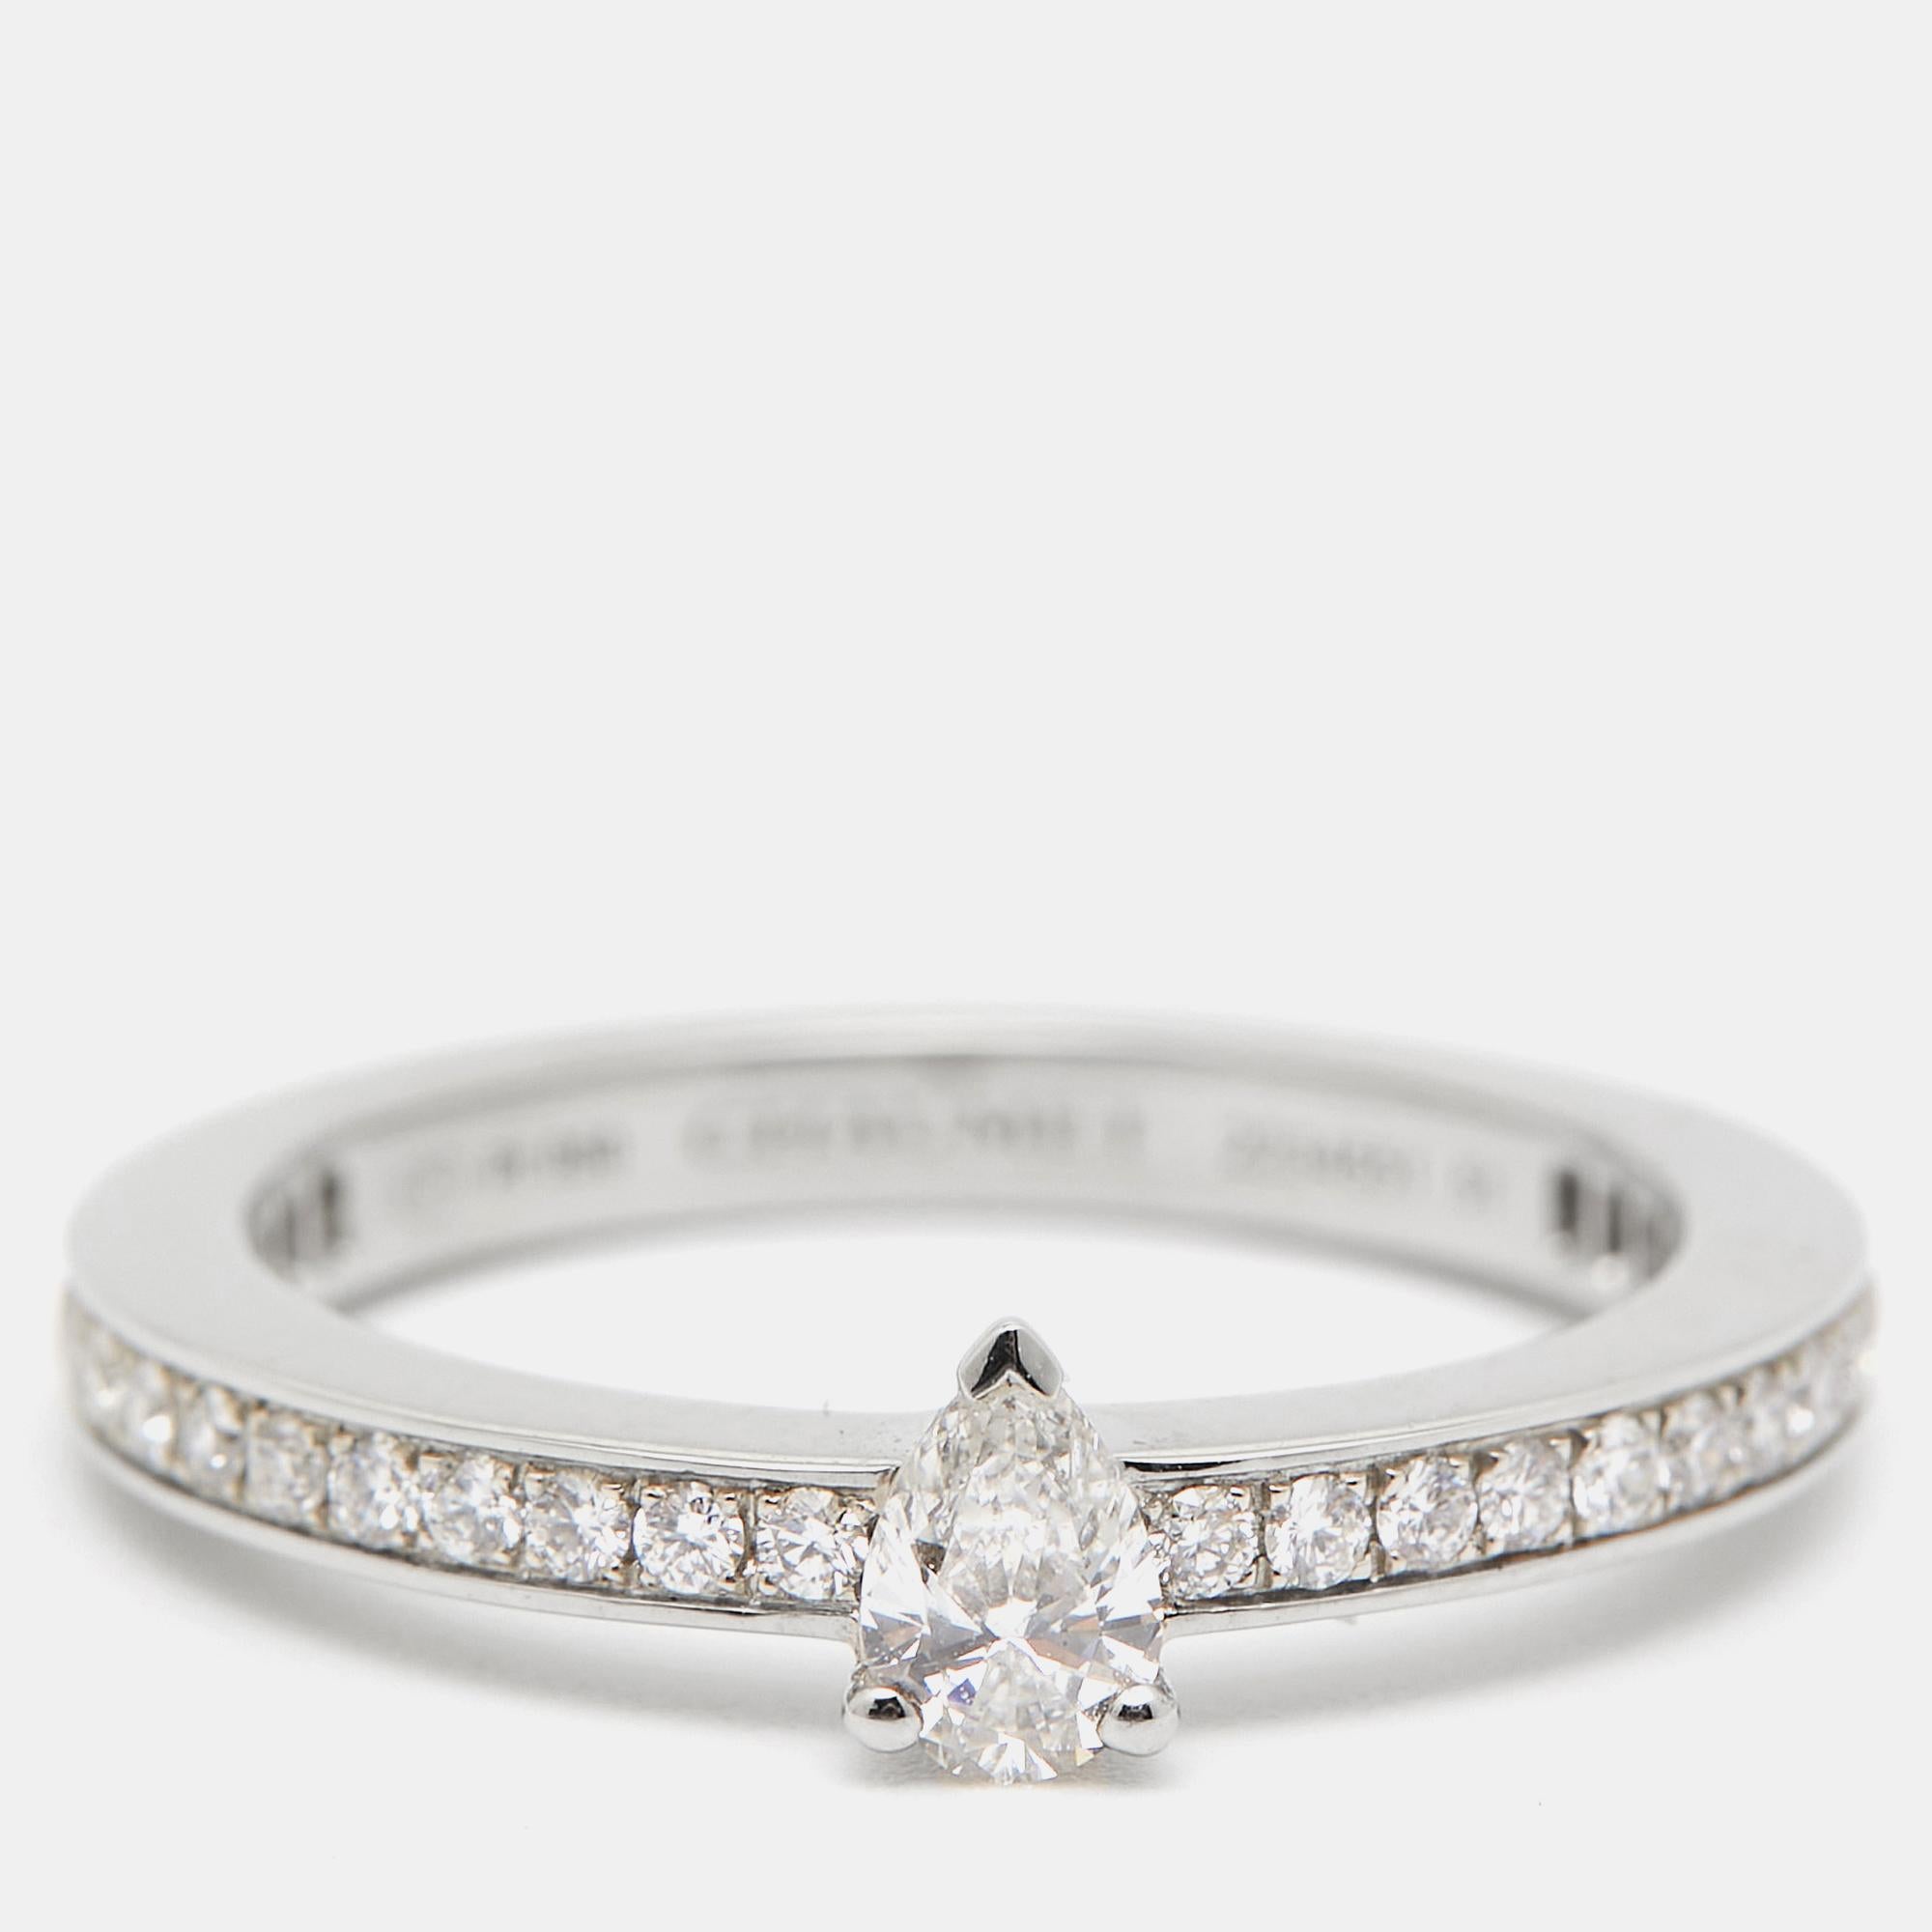 Chaumet Triomphe de Chaumet Diamond Platinum Ring Size 51 1